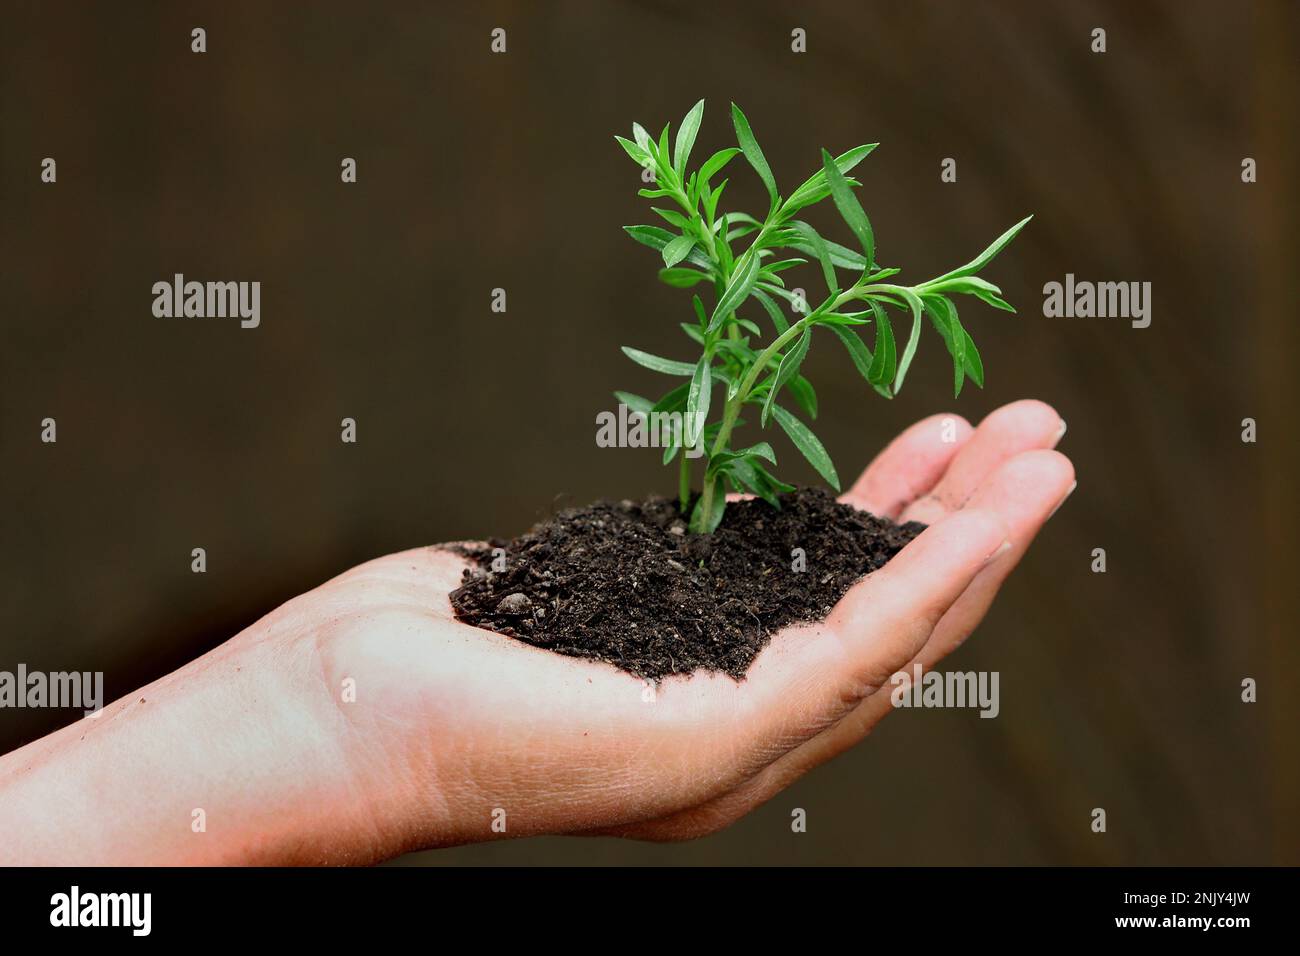 dragon sagewort, tarragon, estragole, esdragol, esdragon (Artemisia dracunculus), twigs of tarragon in soil in a hand Stock Photo